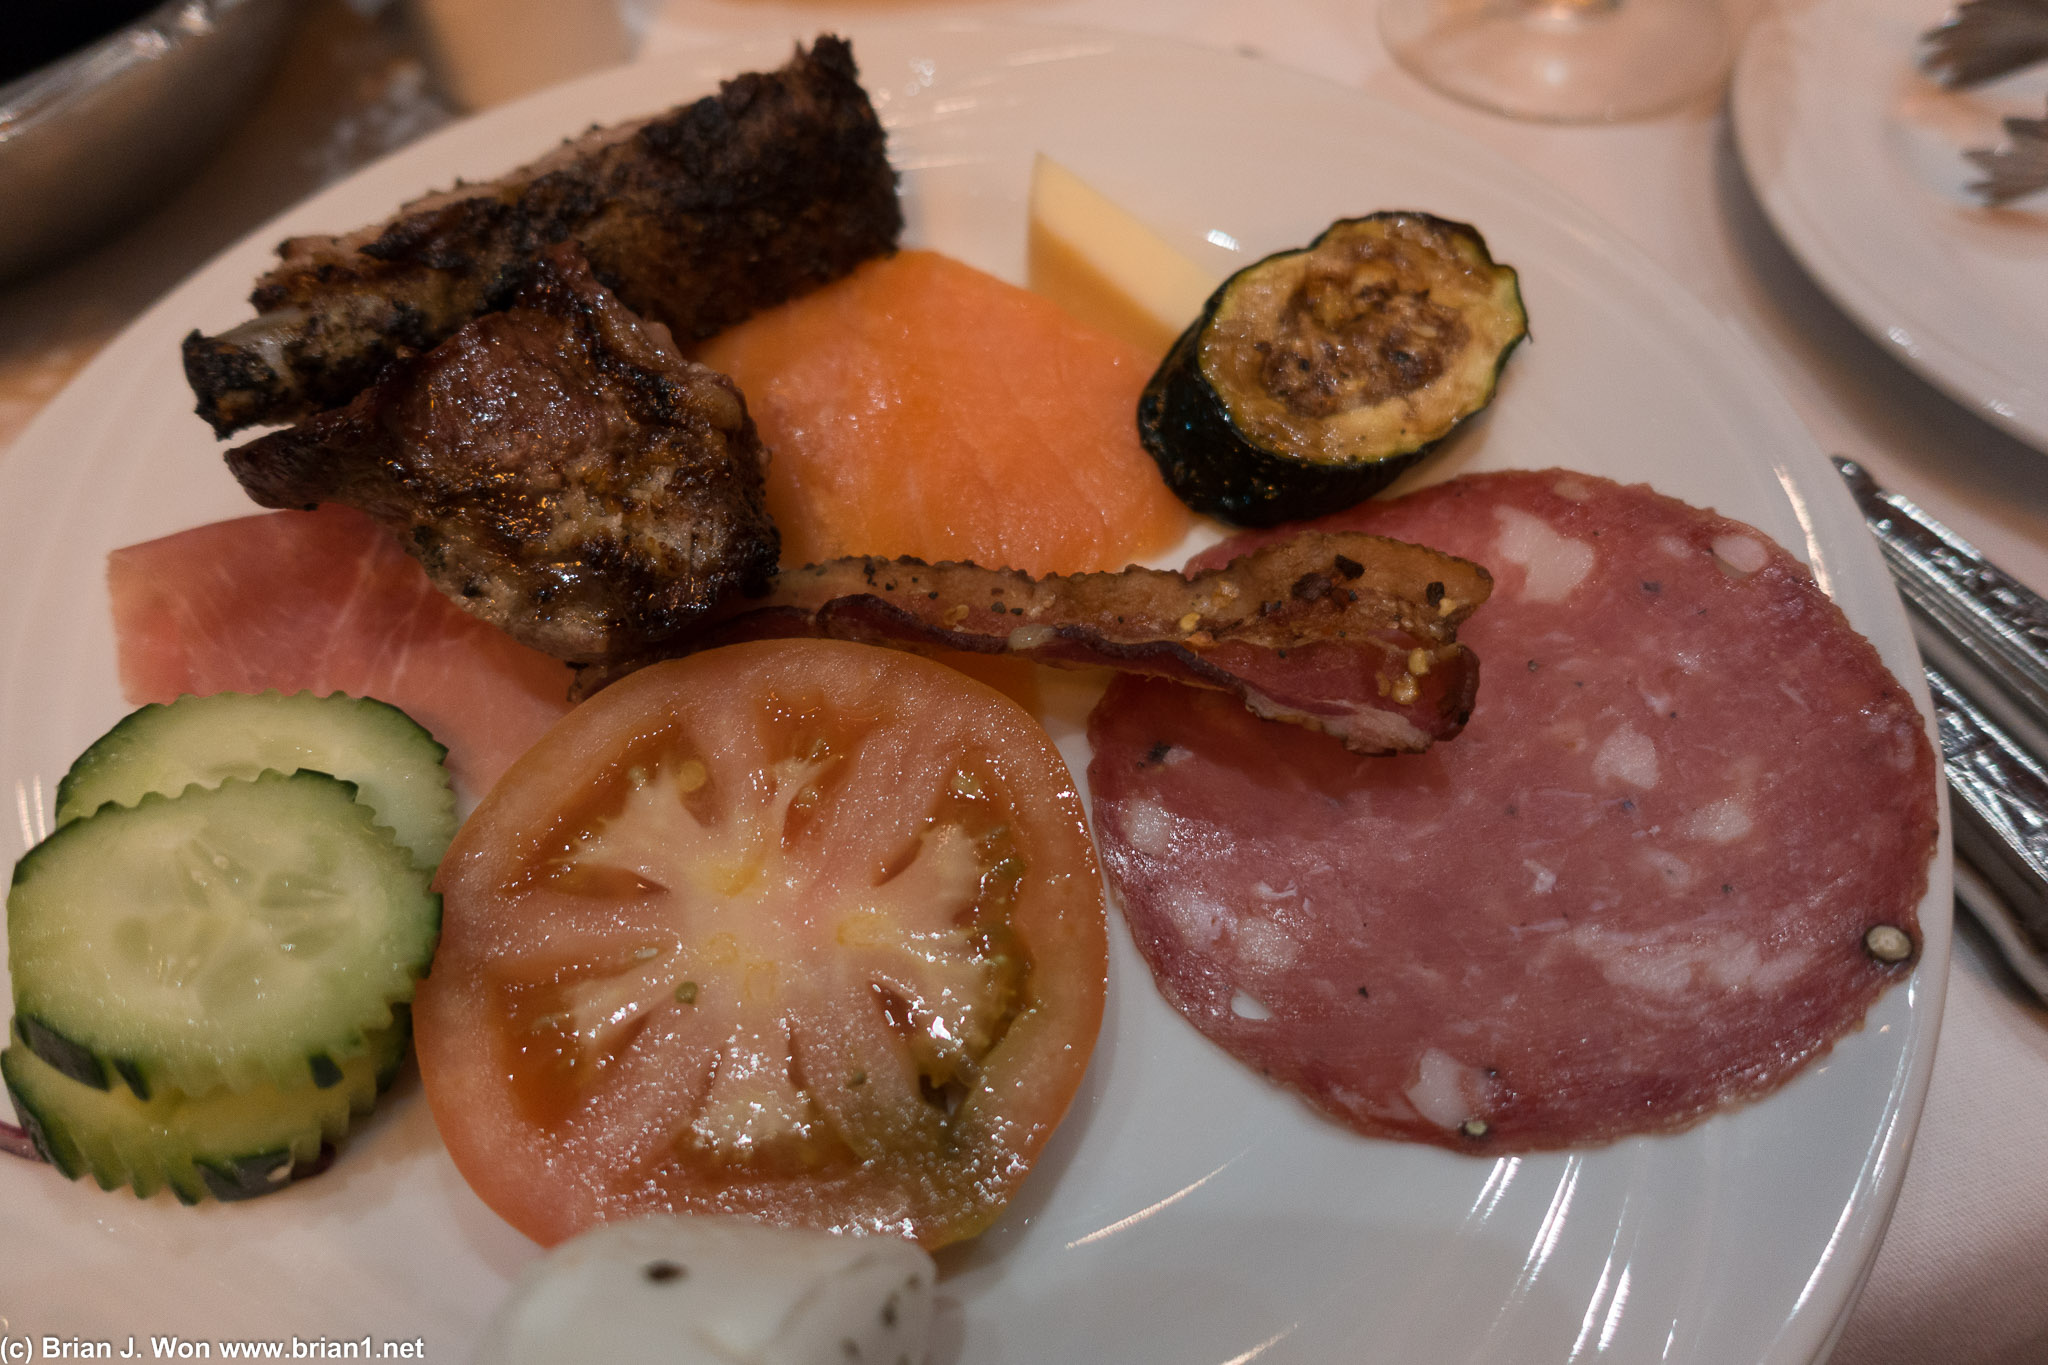 Salad bar including smoked salmon, bacon. Plus some garlic beef (NOM NOM!) and pork rib.